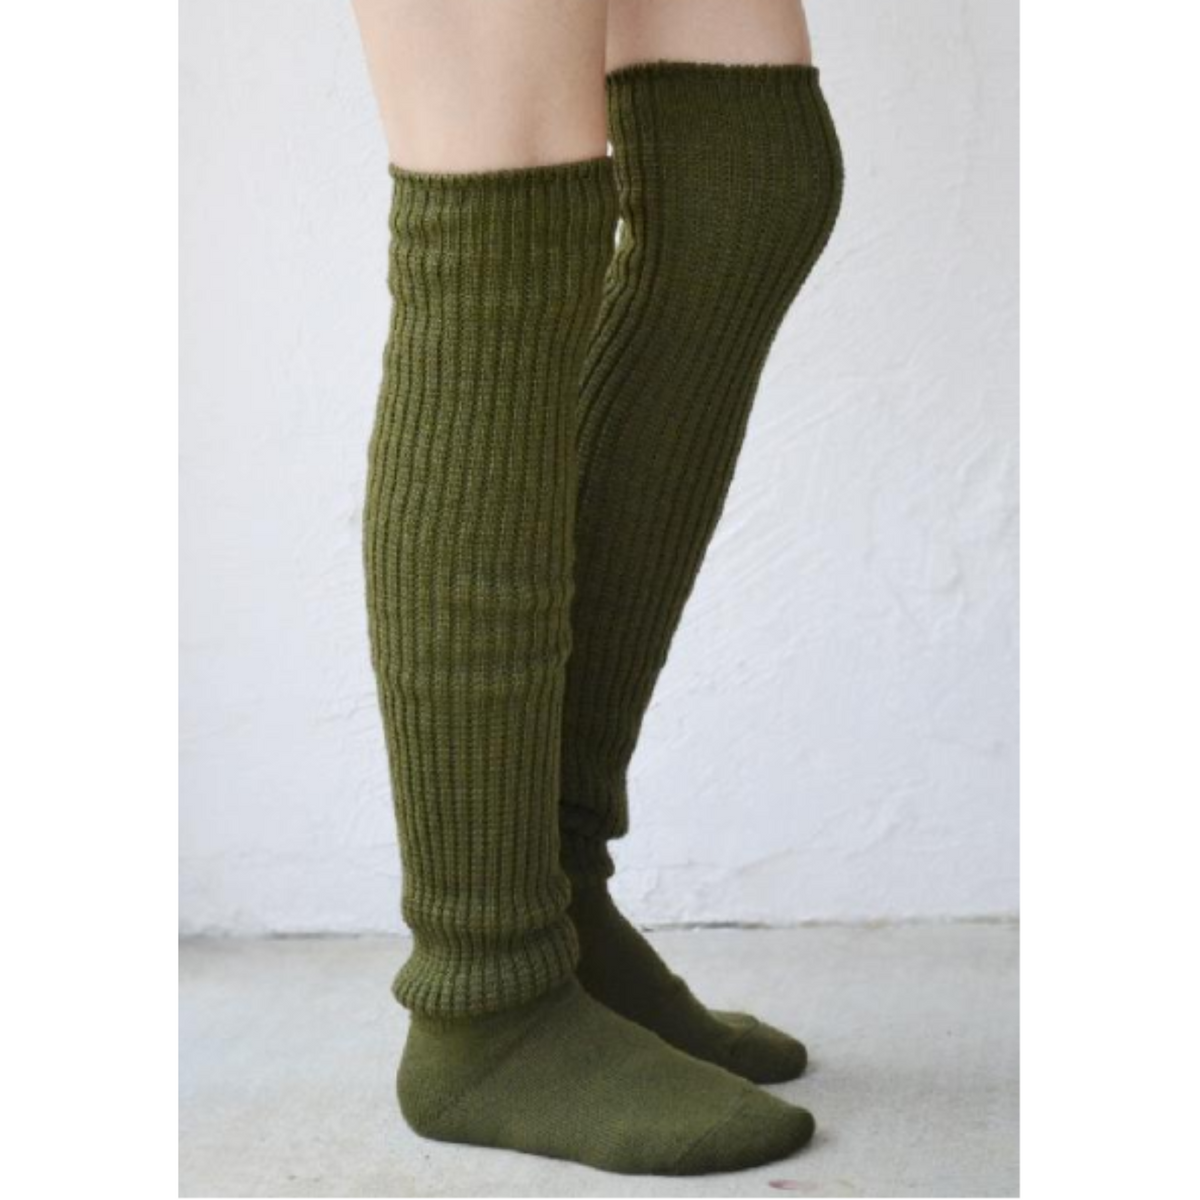 Tabbisocks Scrunchy Over the Knee women&#39;s socks shown in olive color on model.